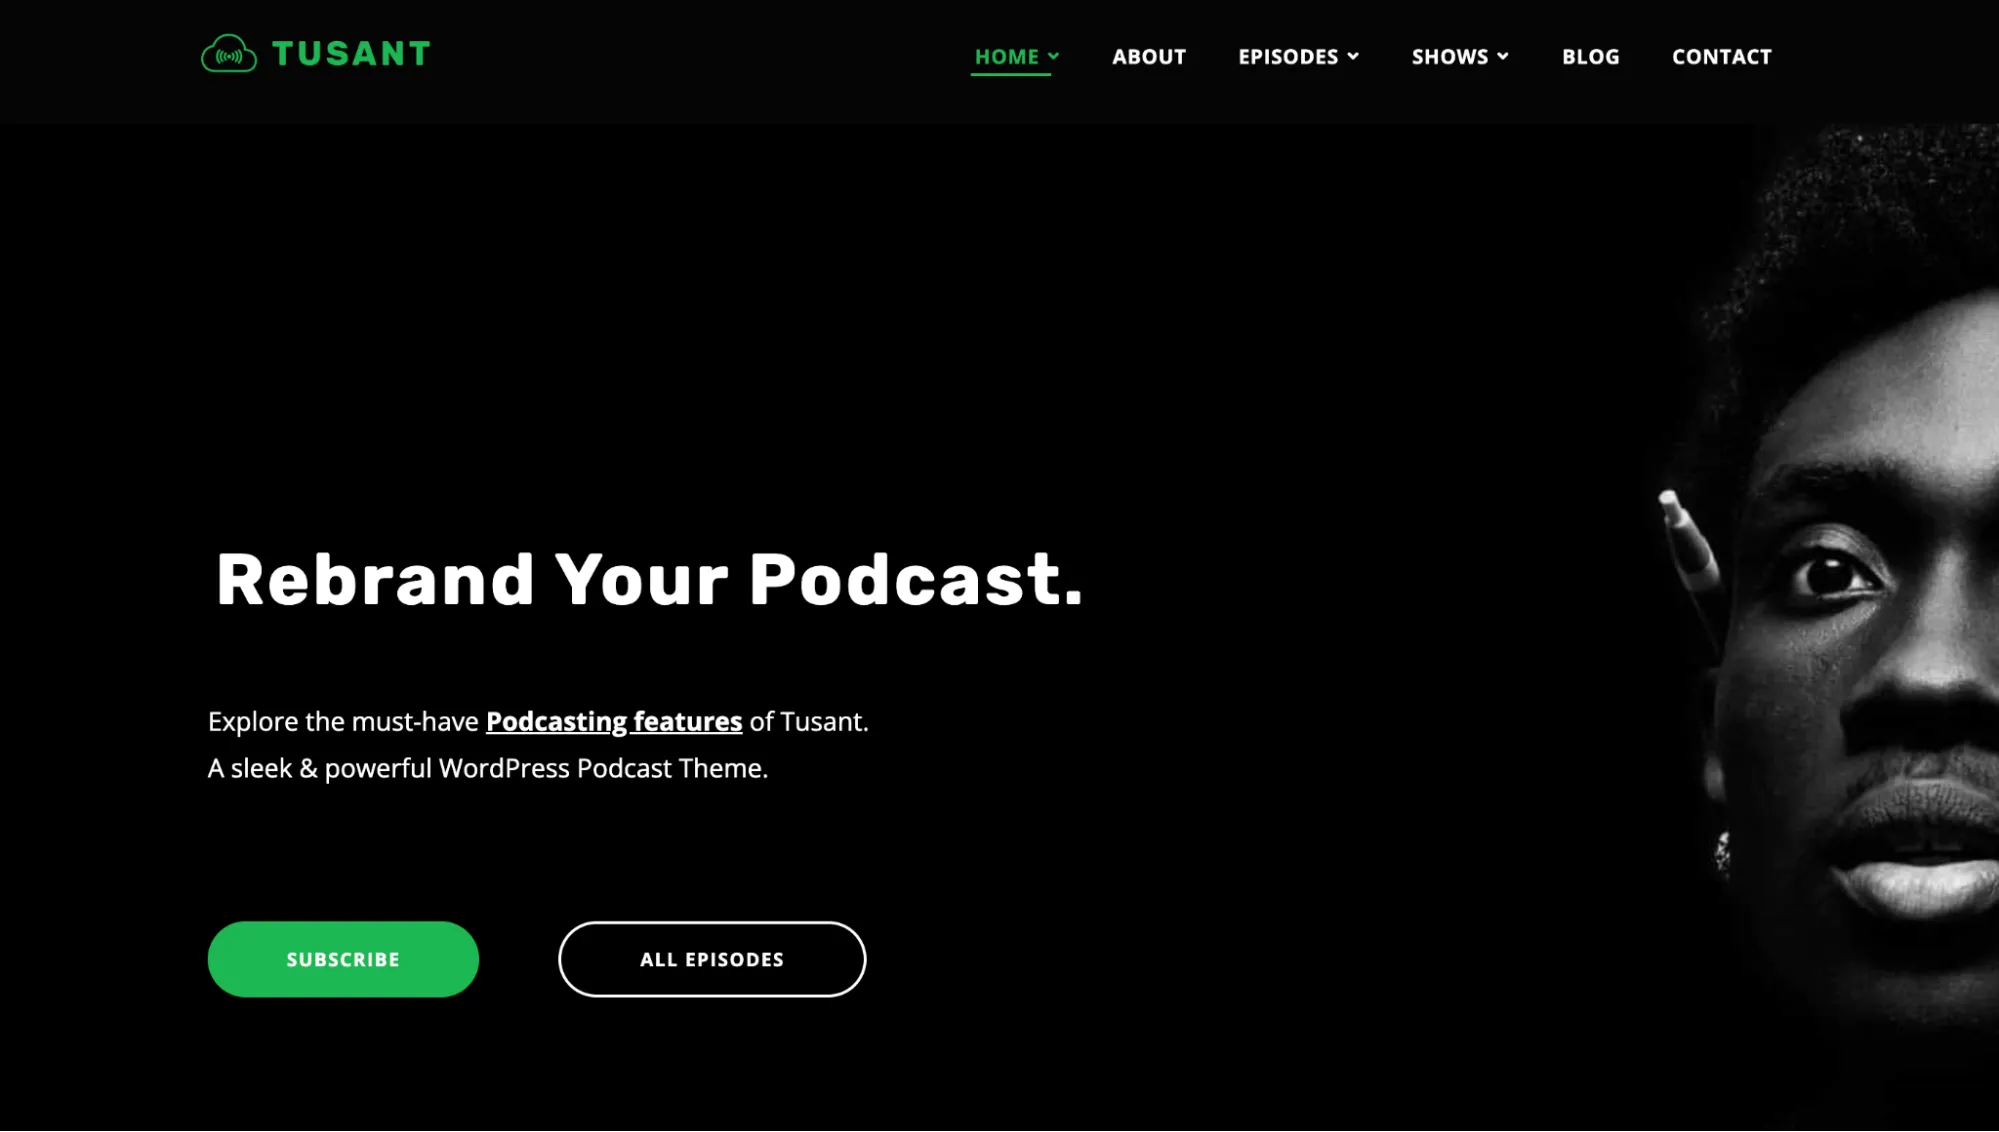 Tusan podcast website template